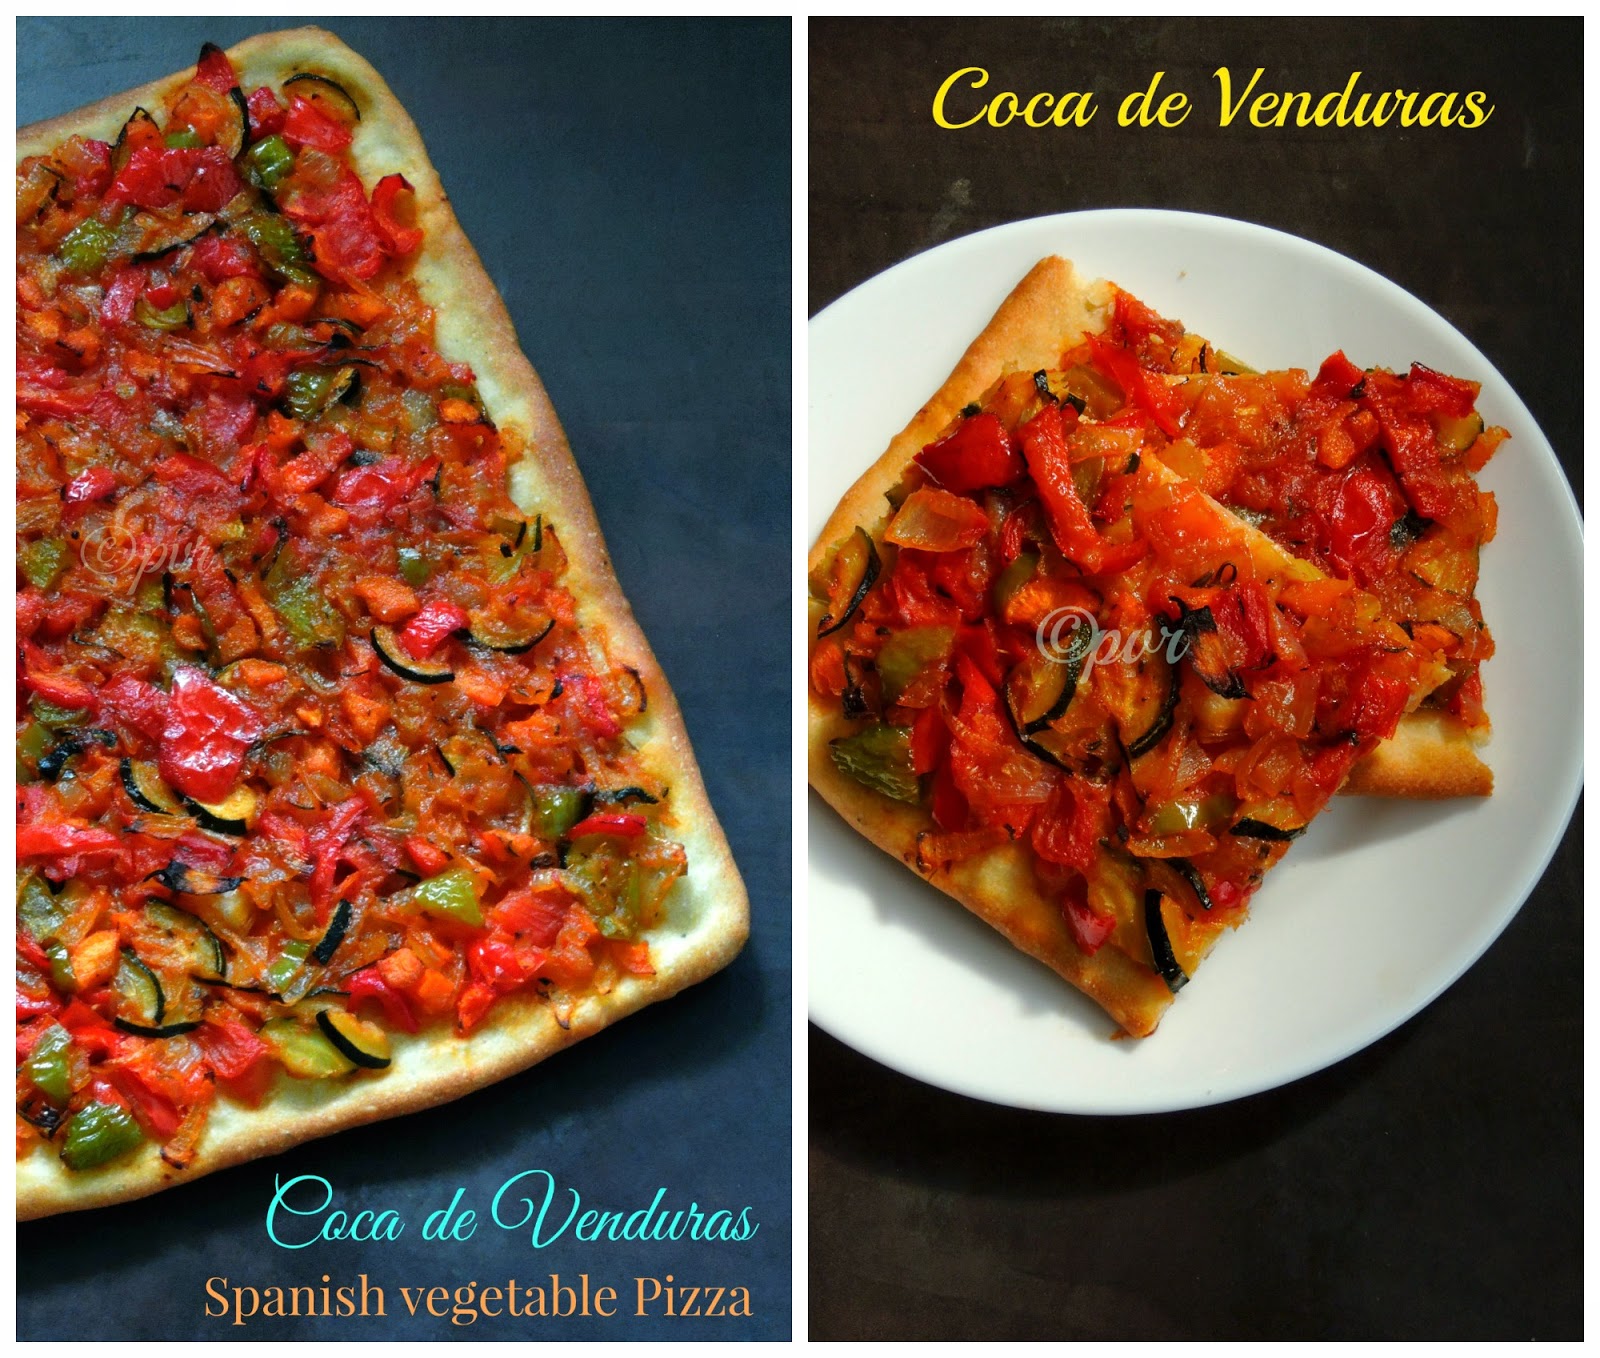 Coca de Venduras, vegan catalan vegetable pizza